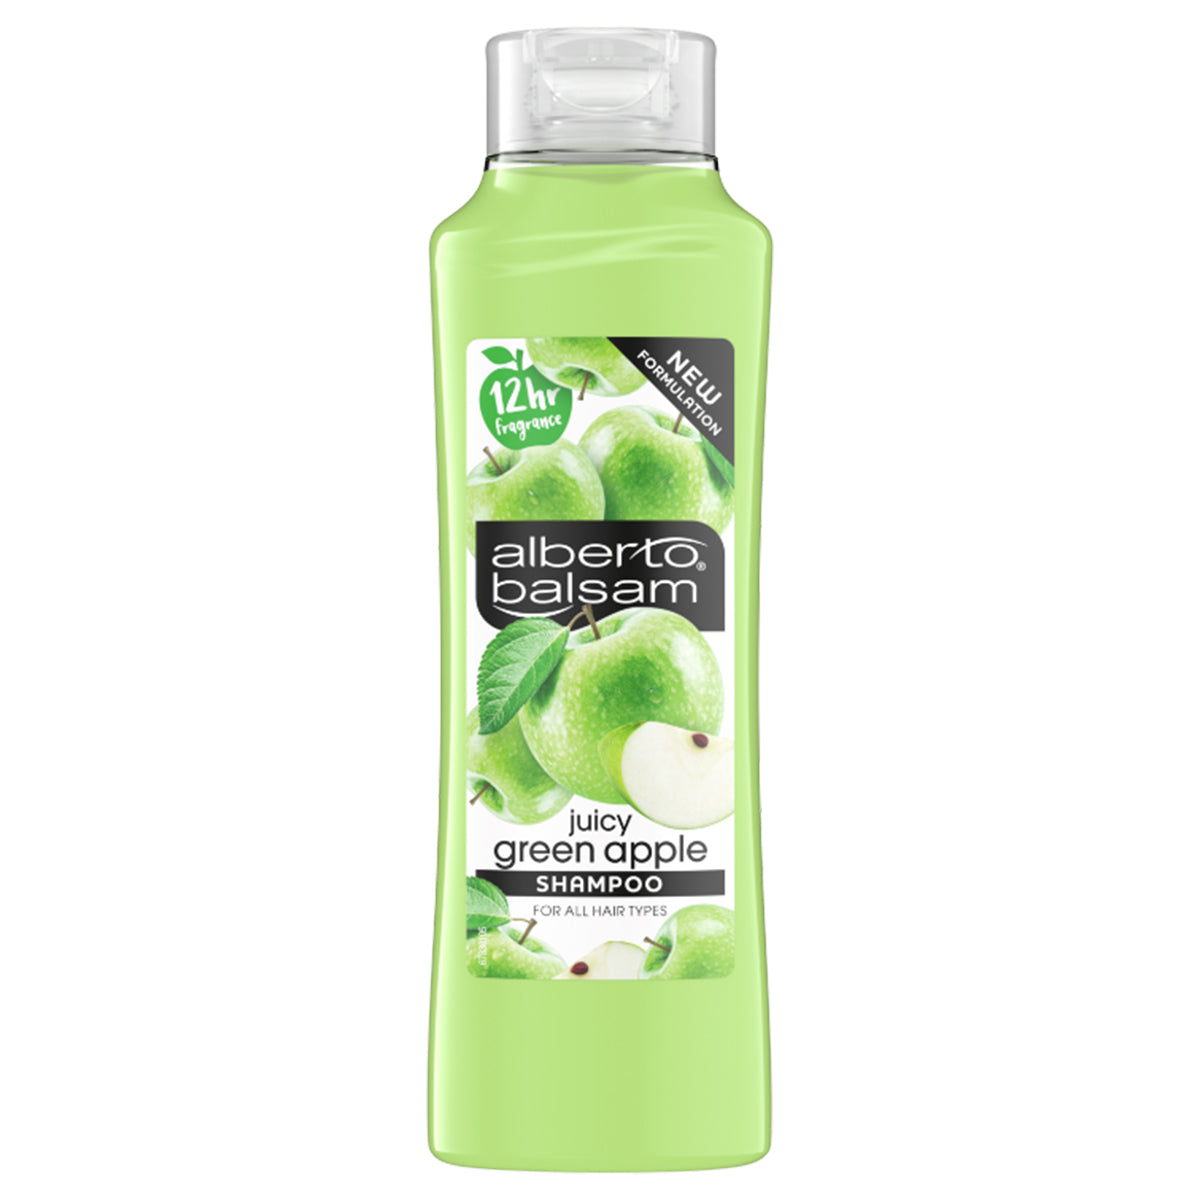 A bottle of Alberto Balsam - Green Apple Shampoo - 350ml on a white background.